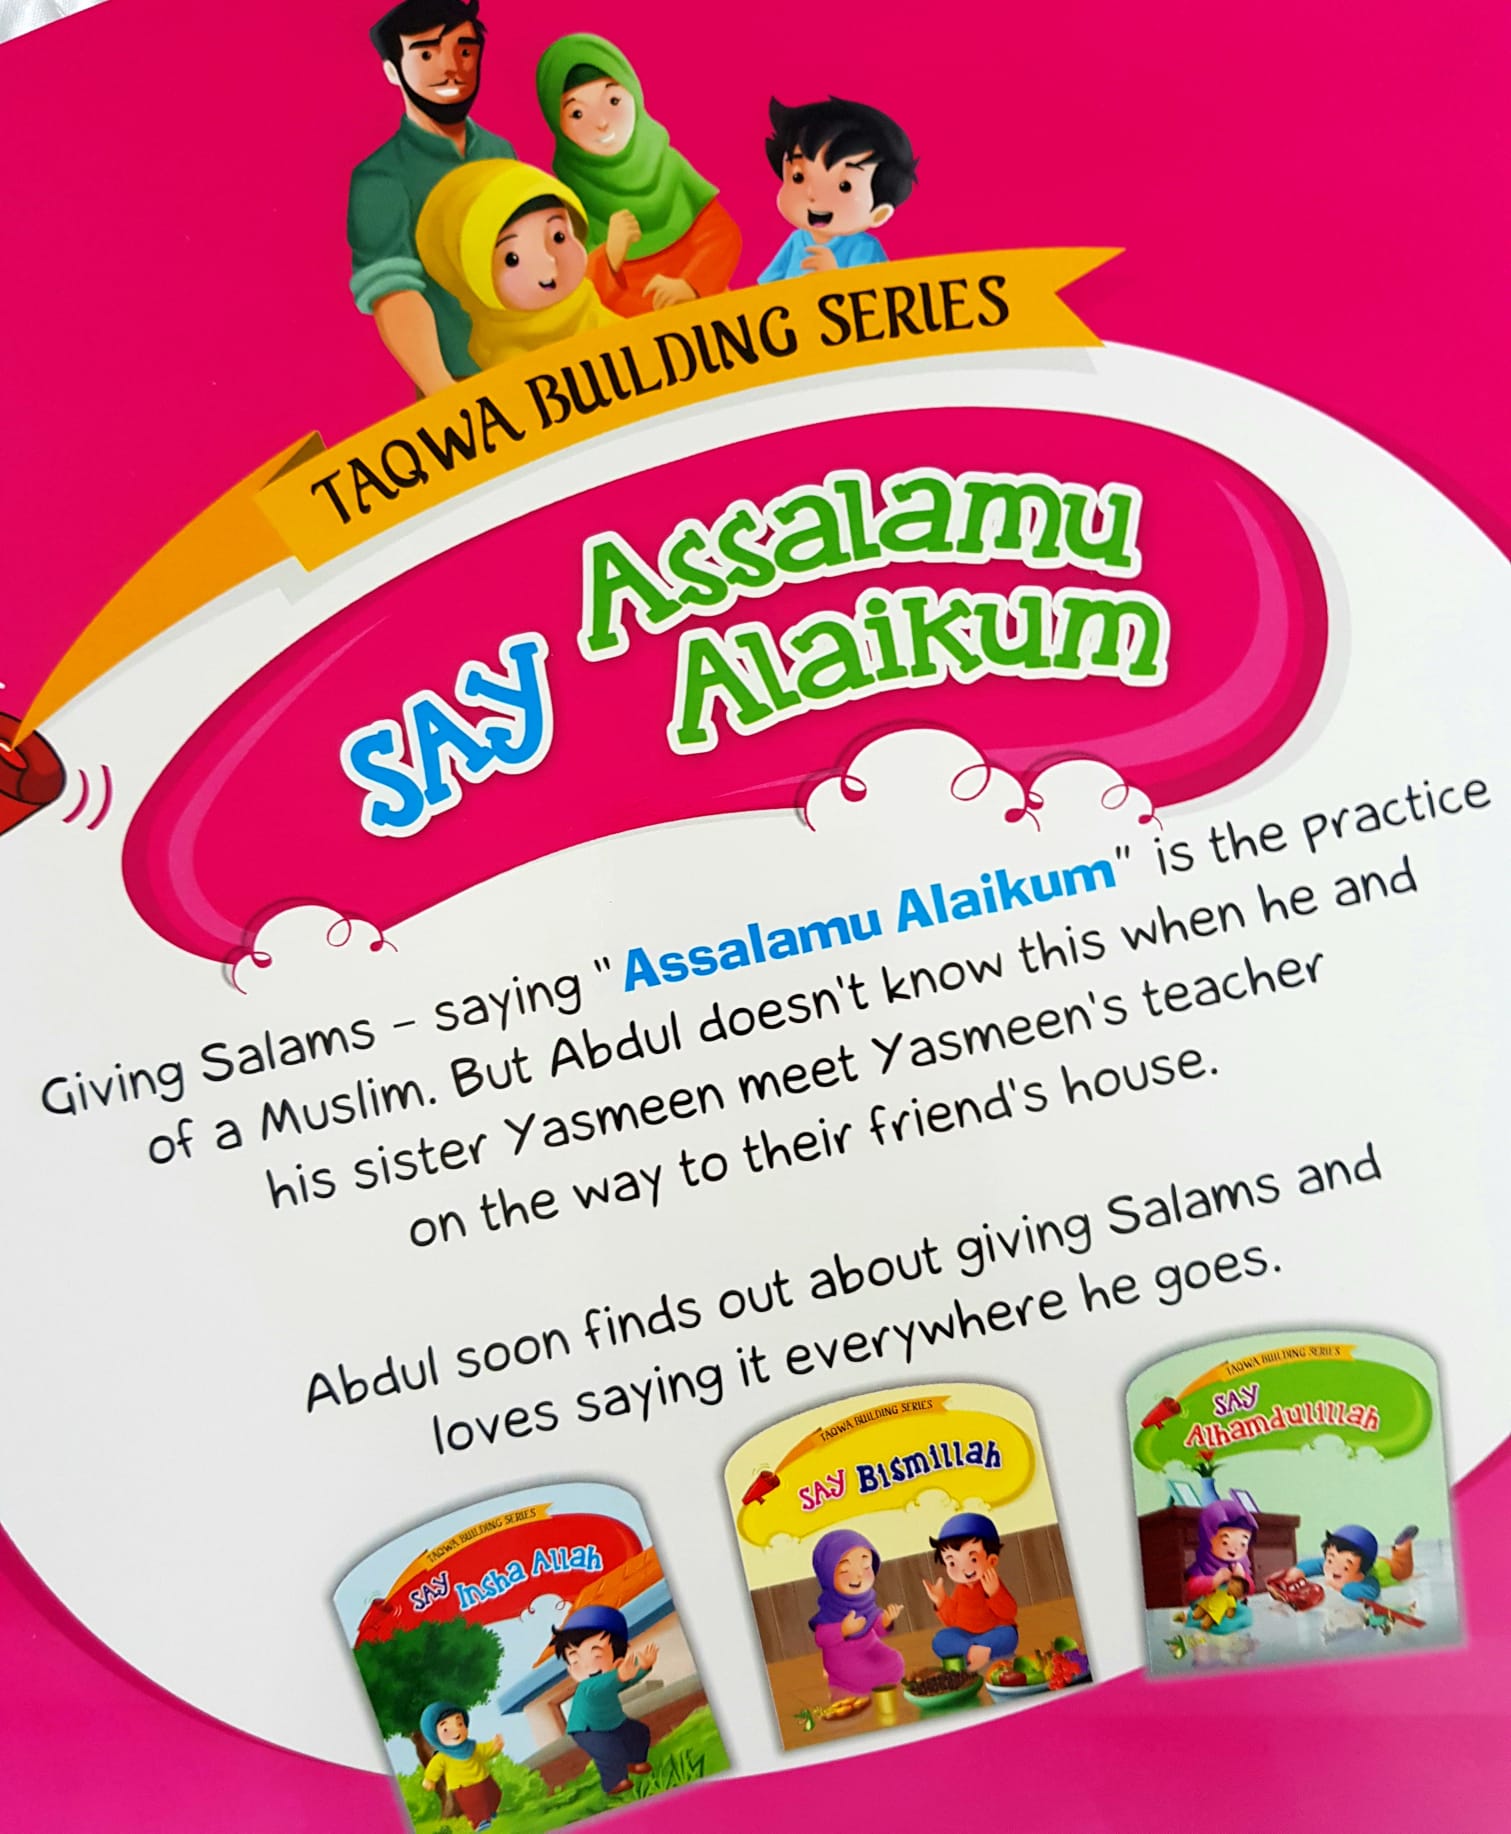 Say Assalamu Alaikum (Taqwa Building Series)